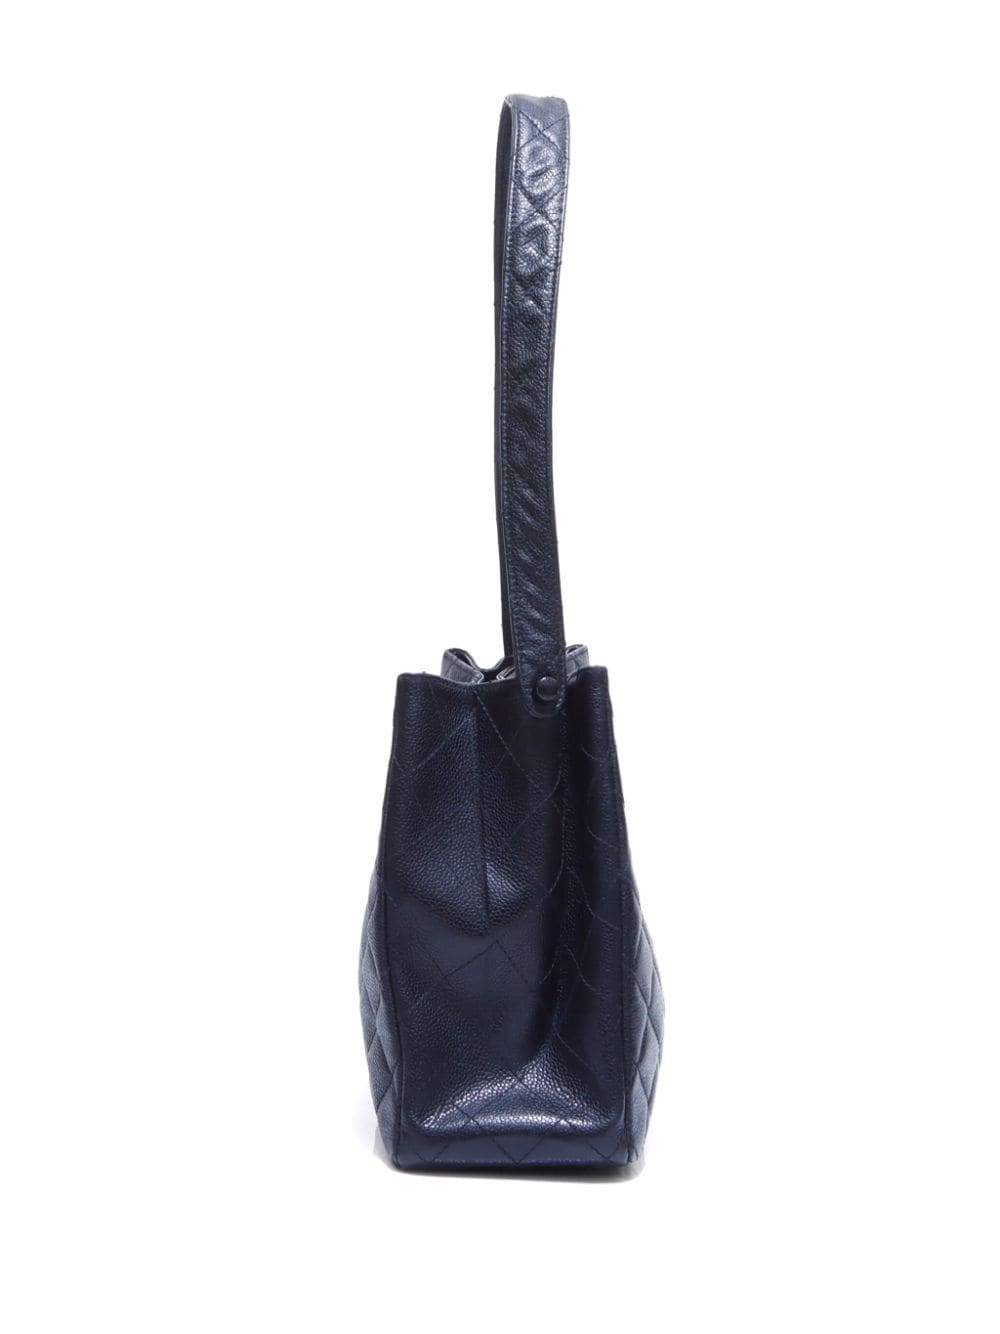 Pre-owned Chanel 2004 Cc Turn-lock Shoulder Bag In Black